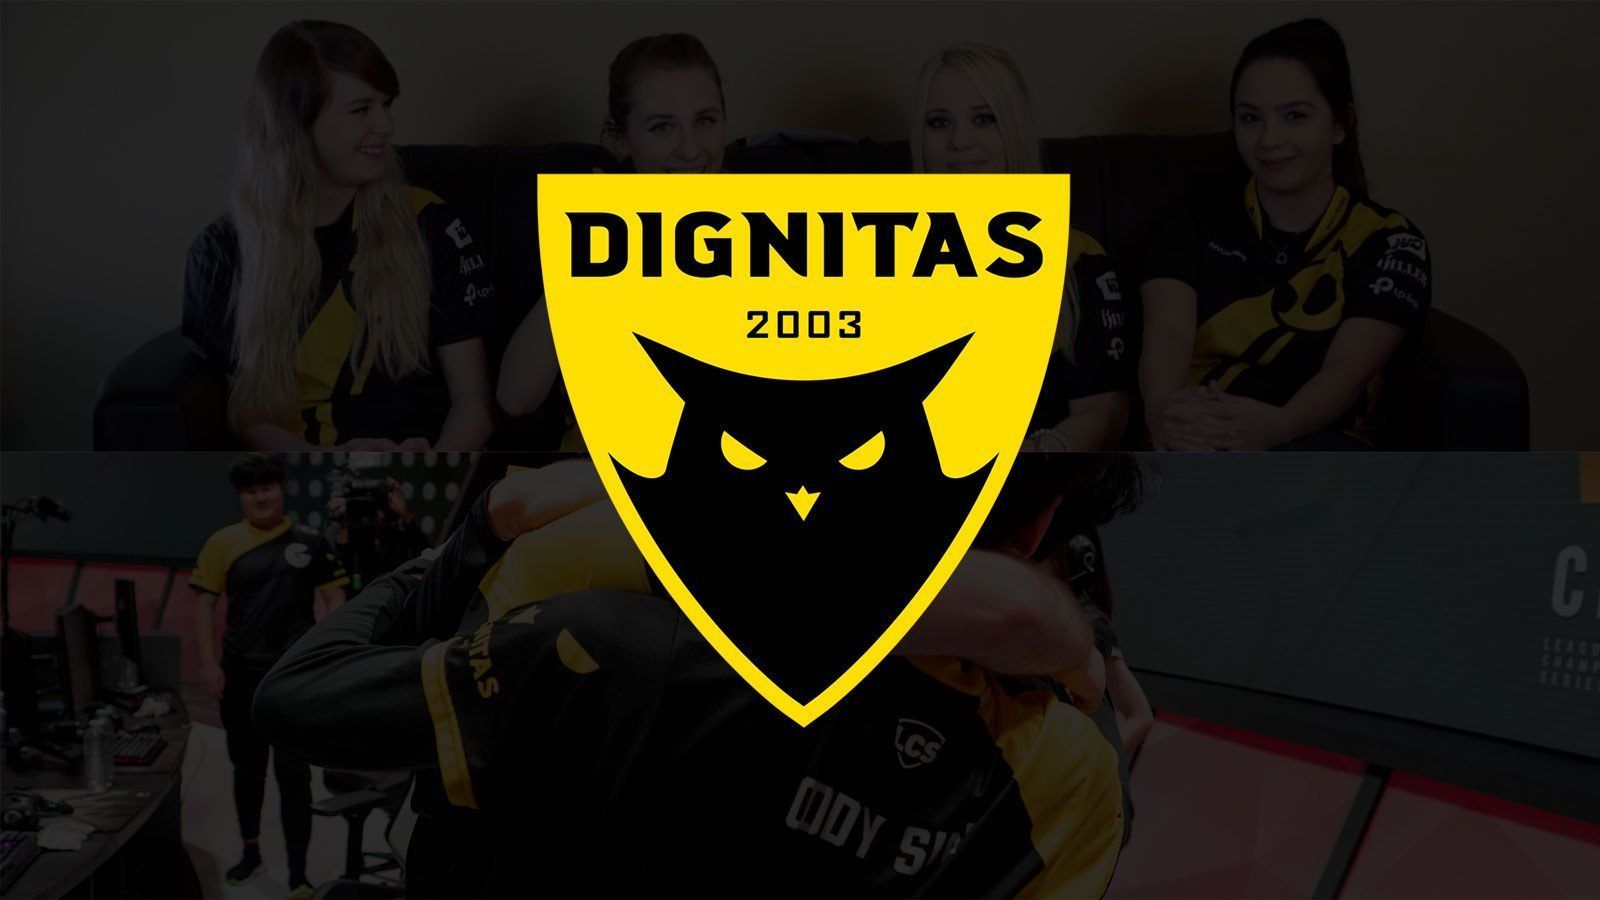 Гоу эгейн. Dignitas 2003. Дигнитас ава КС го. Команда dignitas CS go. Дигнитас игроки.